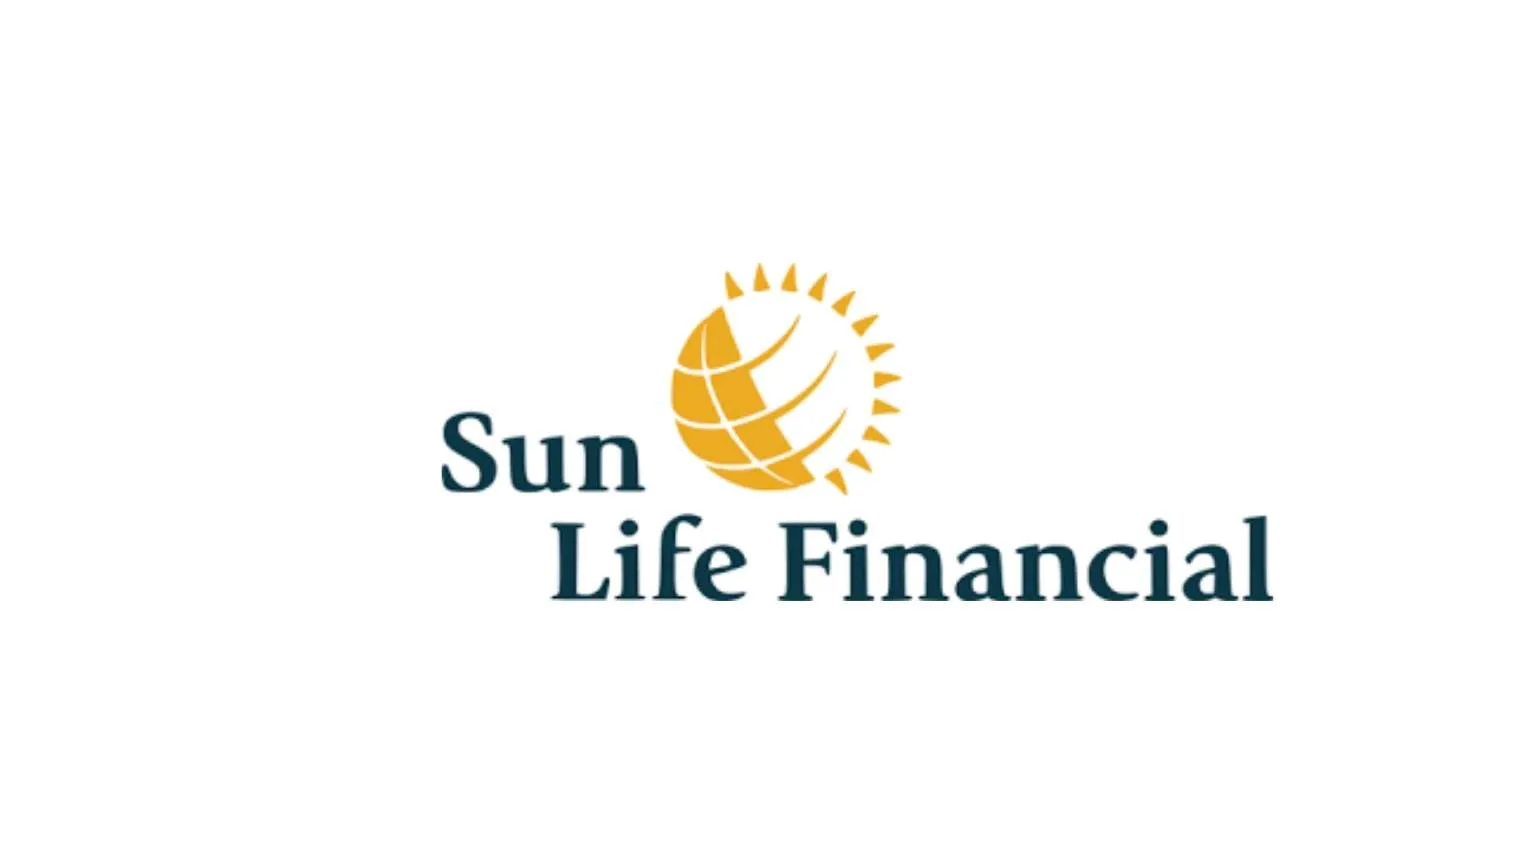 sun life financial life insurance